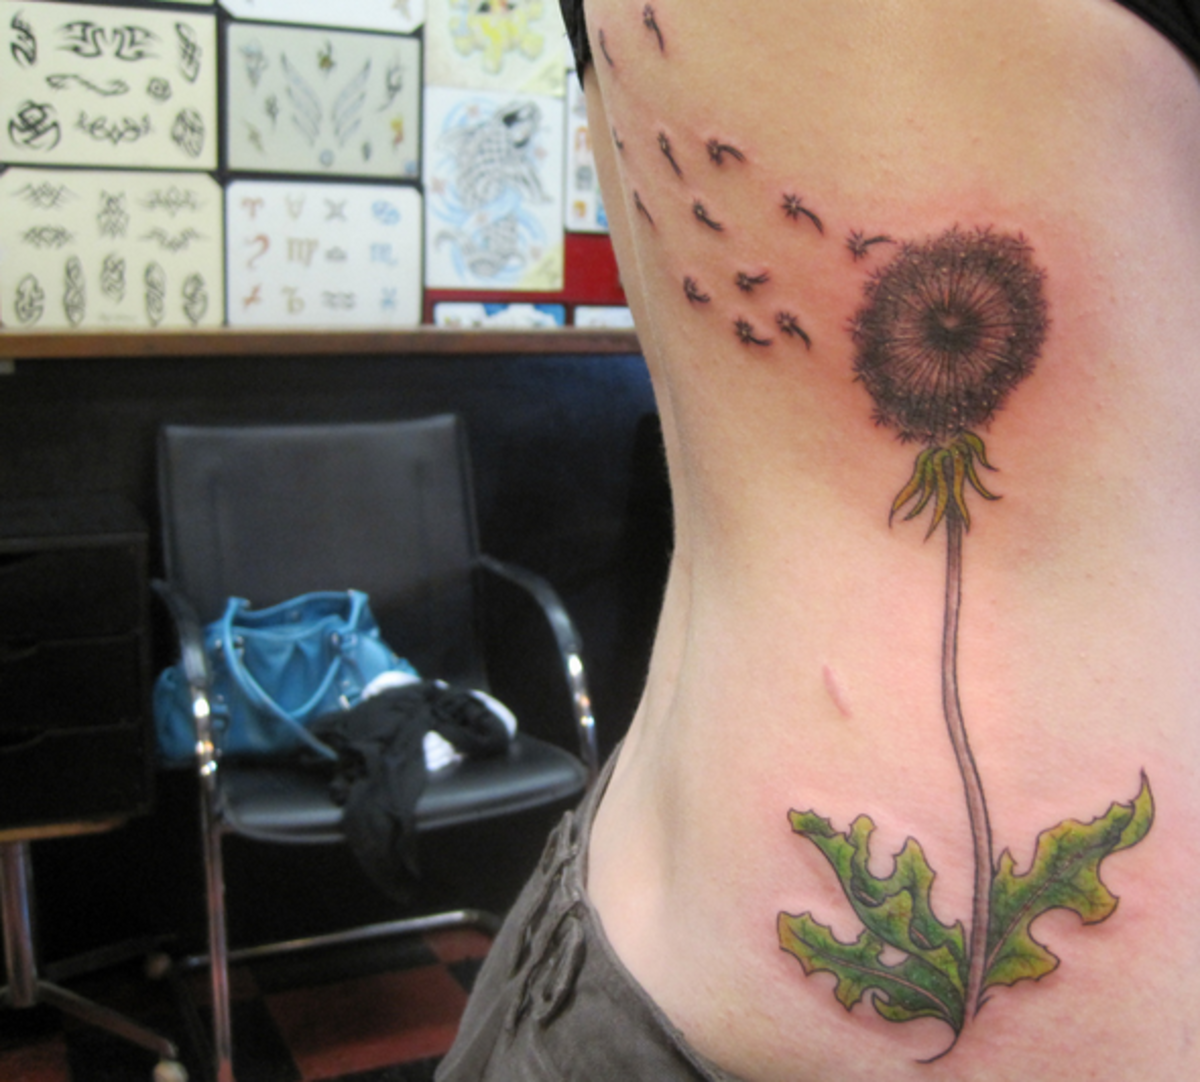 Dandelion tattoo Symbol